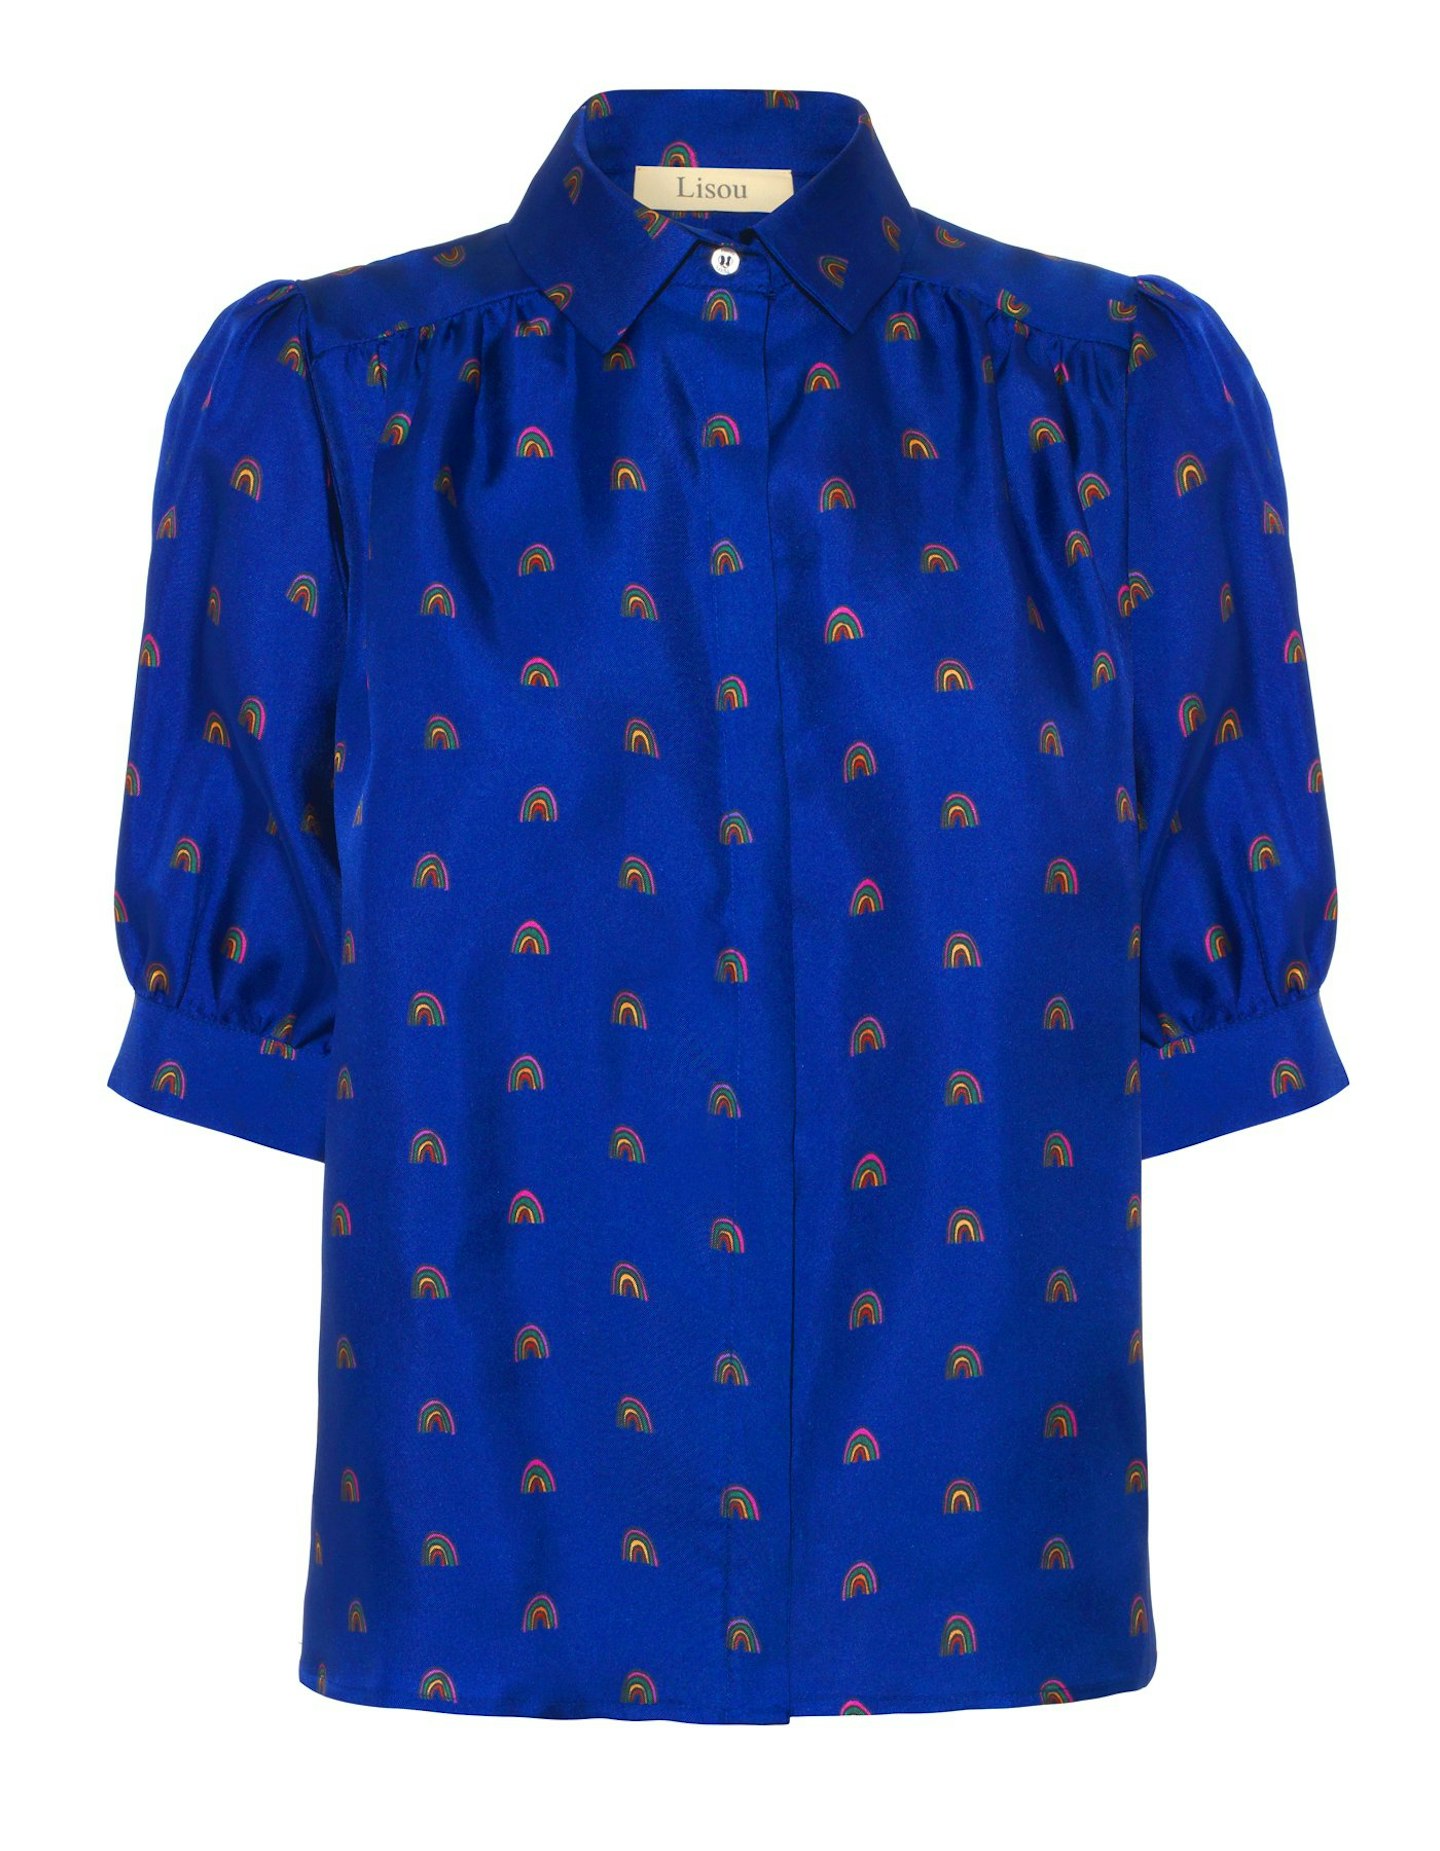 Lisou, Rainbow Print Silk Shirt, £250